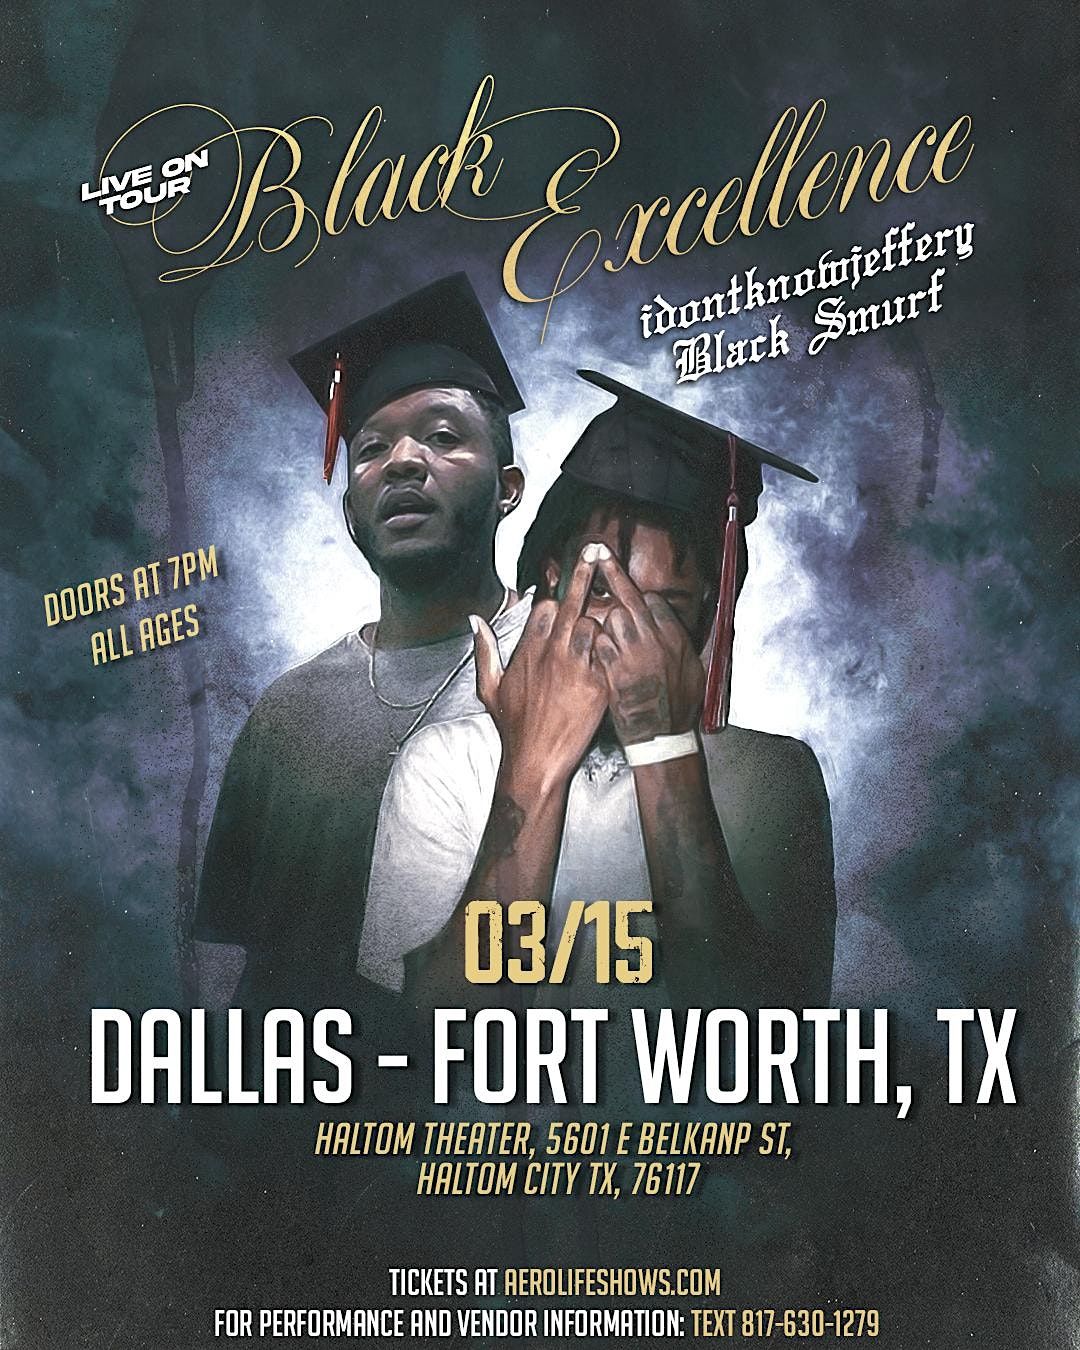 MAY 25th: IDONTKNOWJEFFERY & Black Smurf Live in Houston, TX